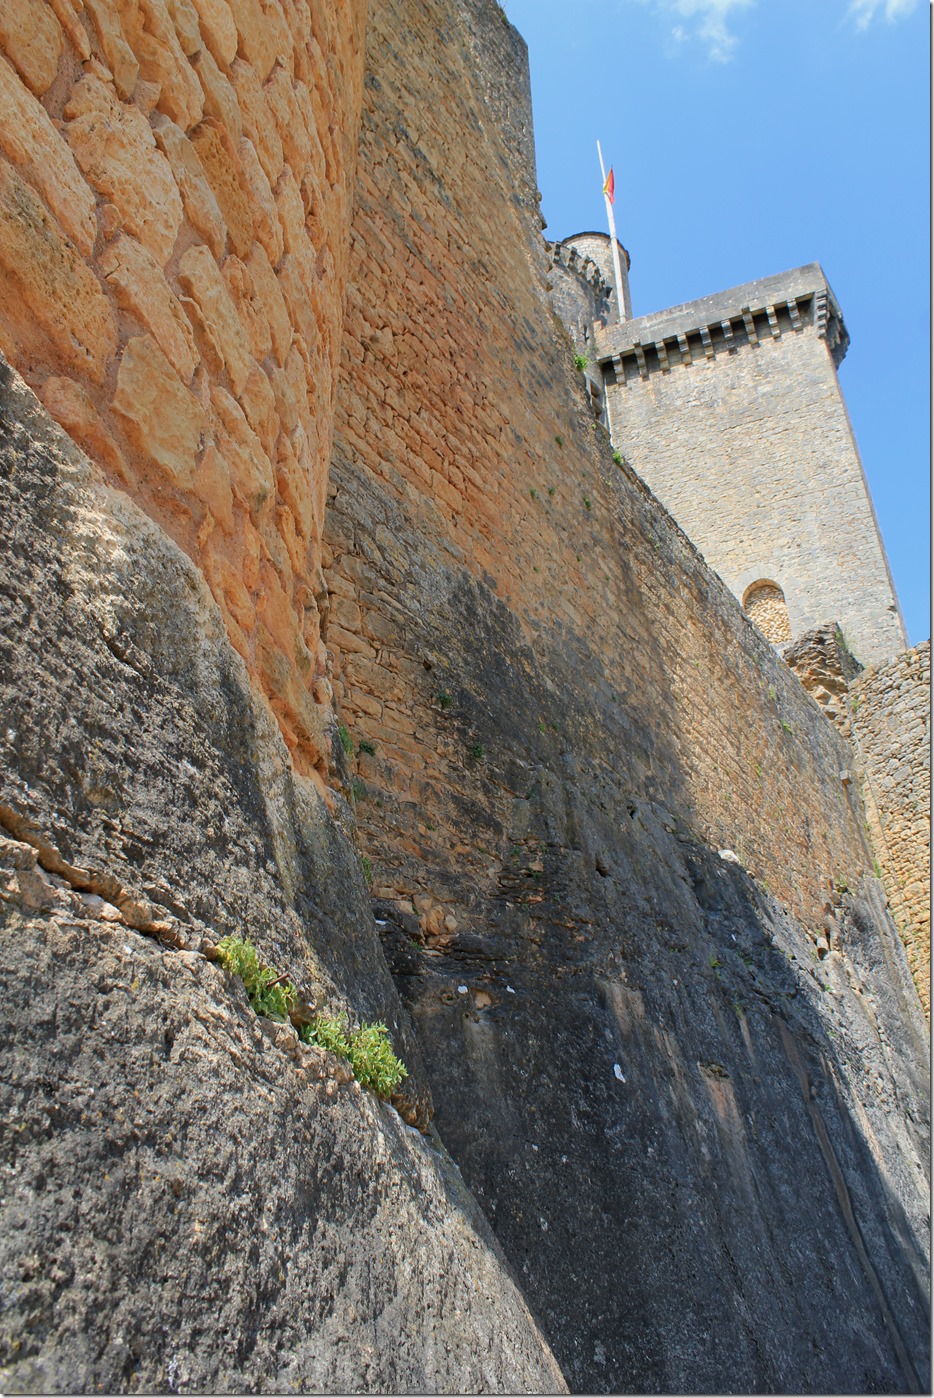 Pictures from Bonaguil Castle, outside Fumel